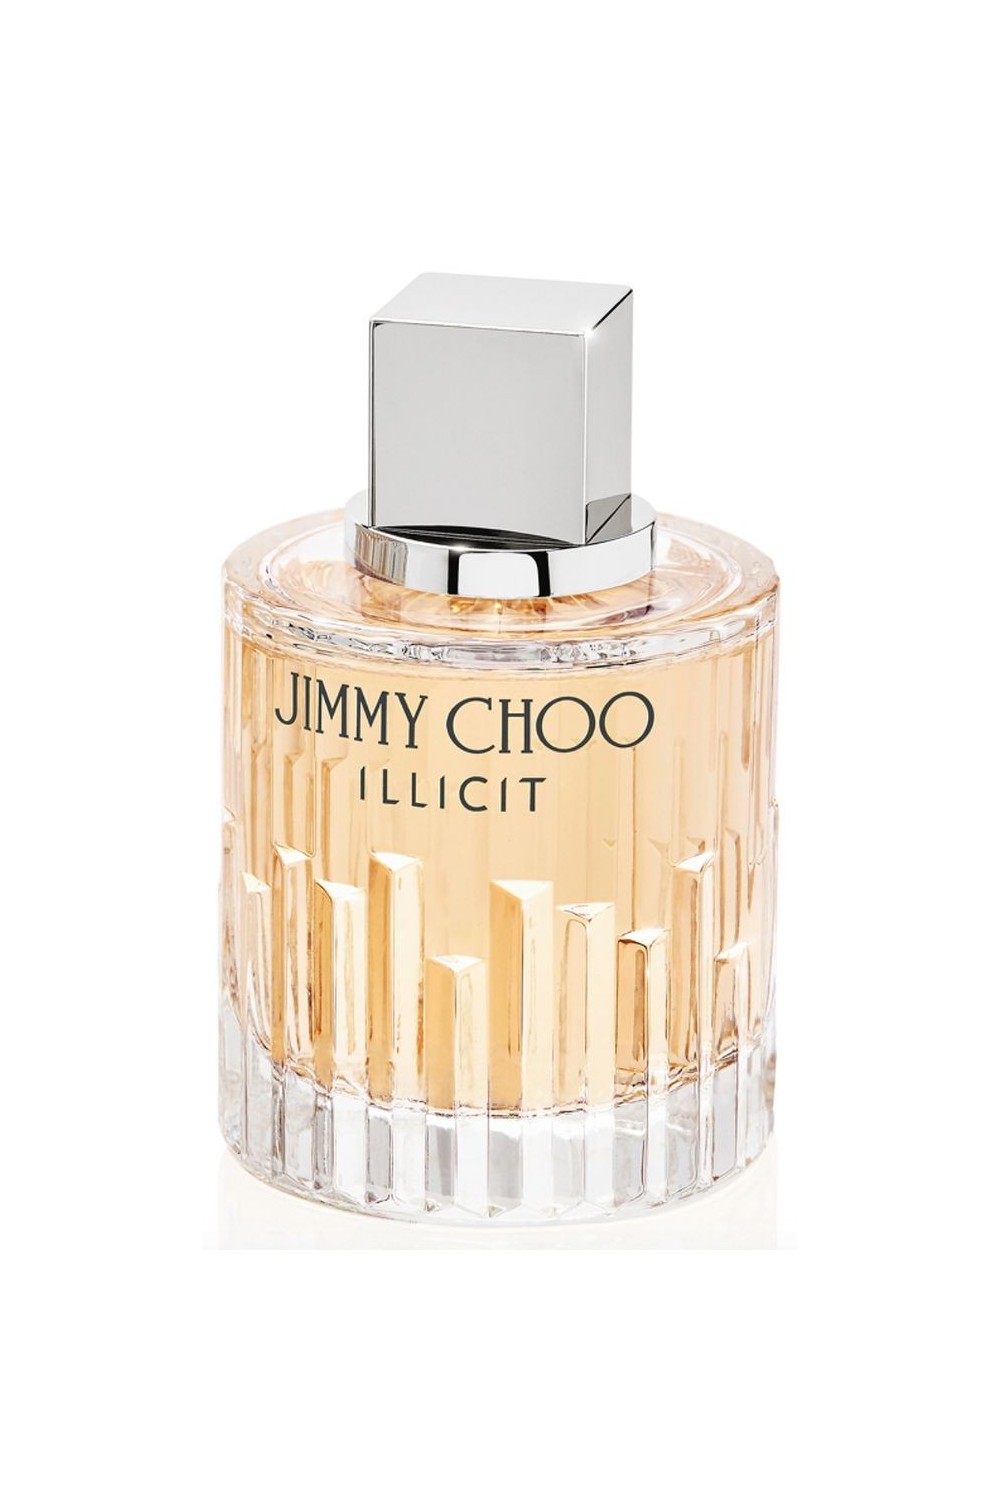 Jimmy Choo Illicit Eau De Perfume Spray 60ml